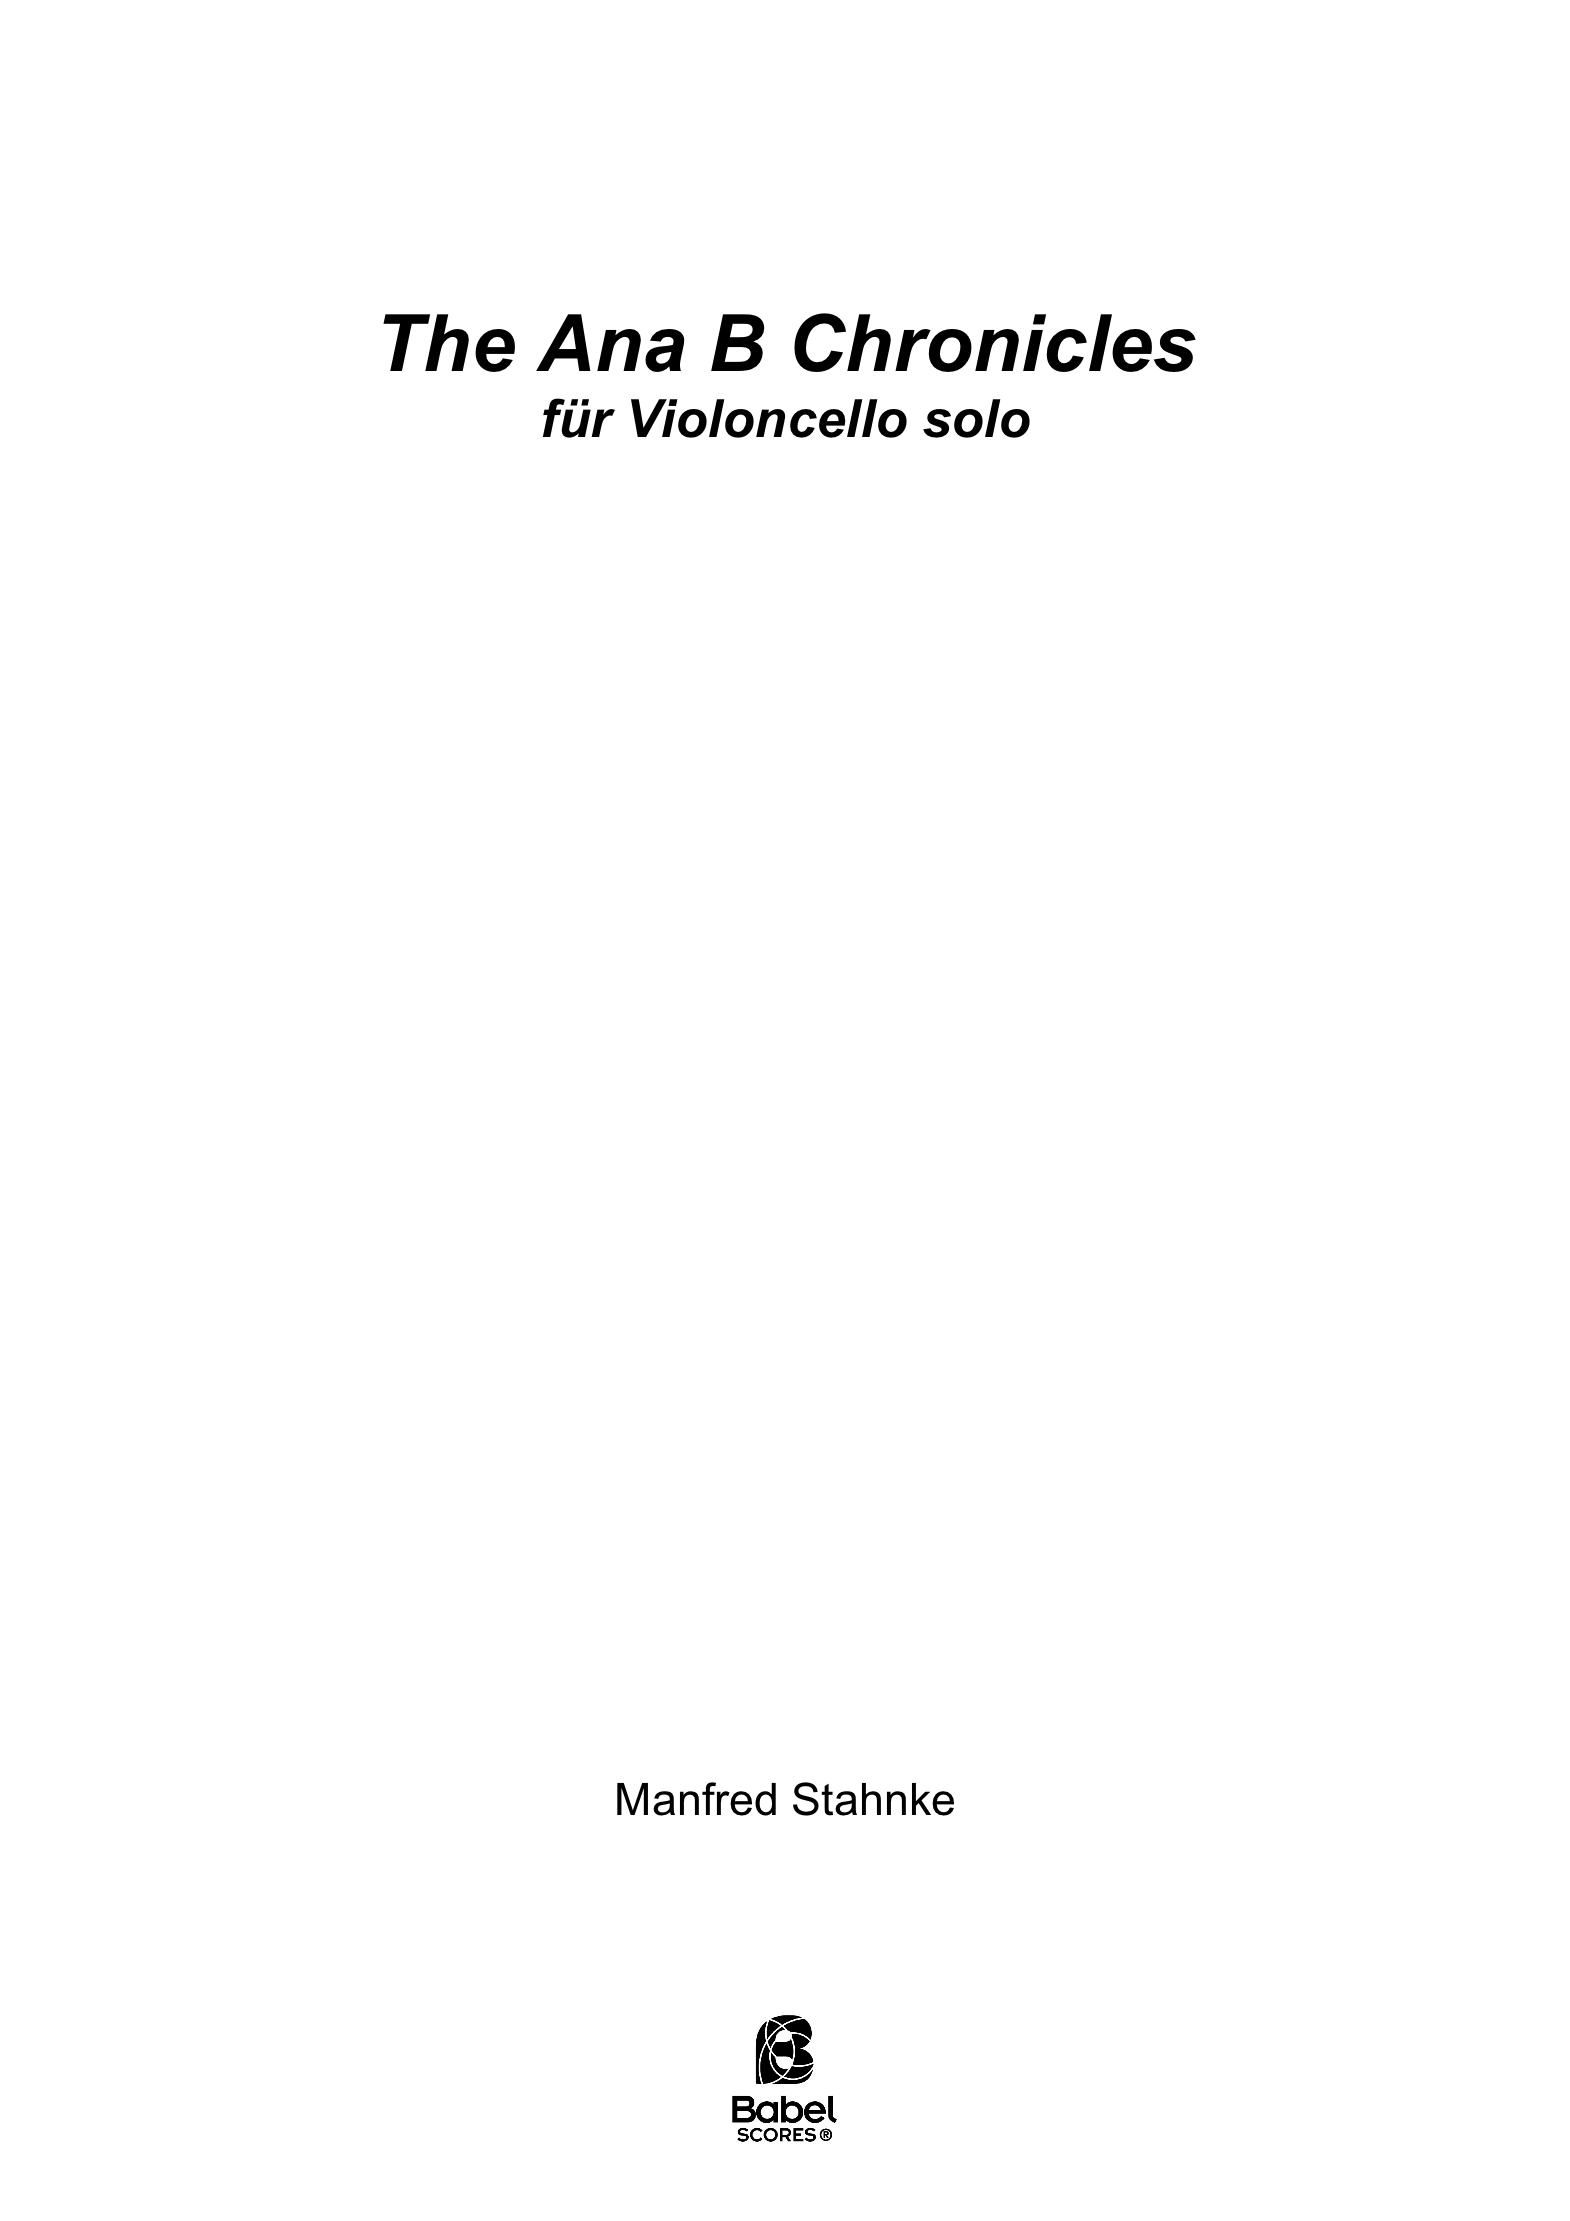 ana b chronicles A4 z 2 157 1 255